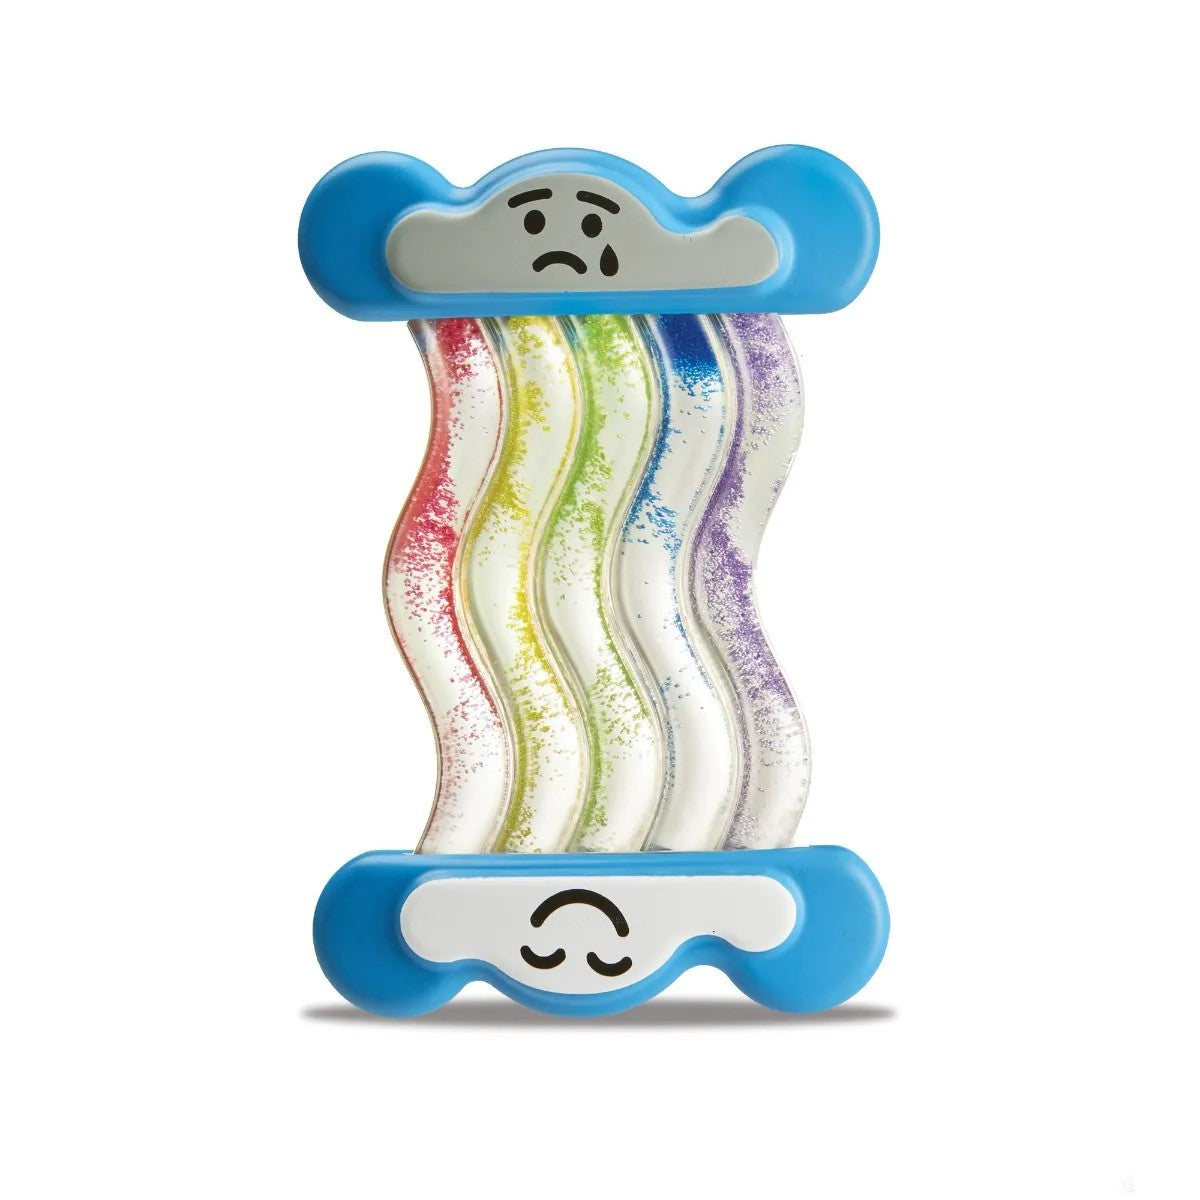 Sensory Emotion Rainbow Fidget